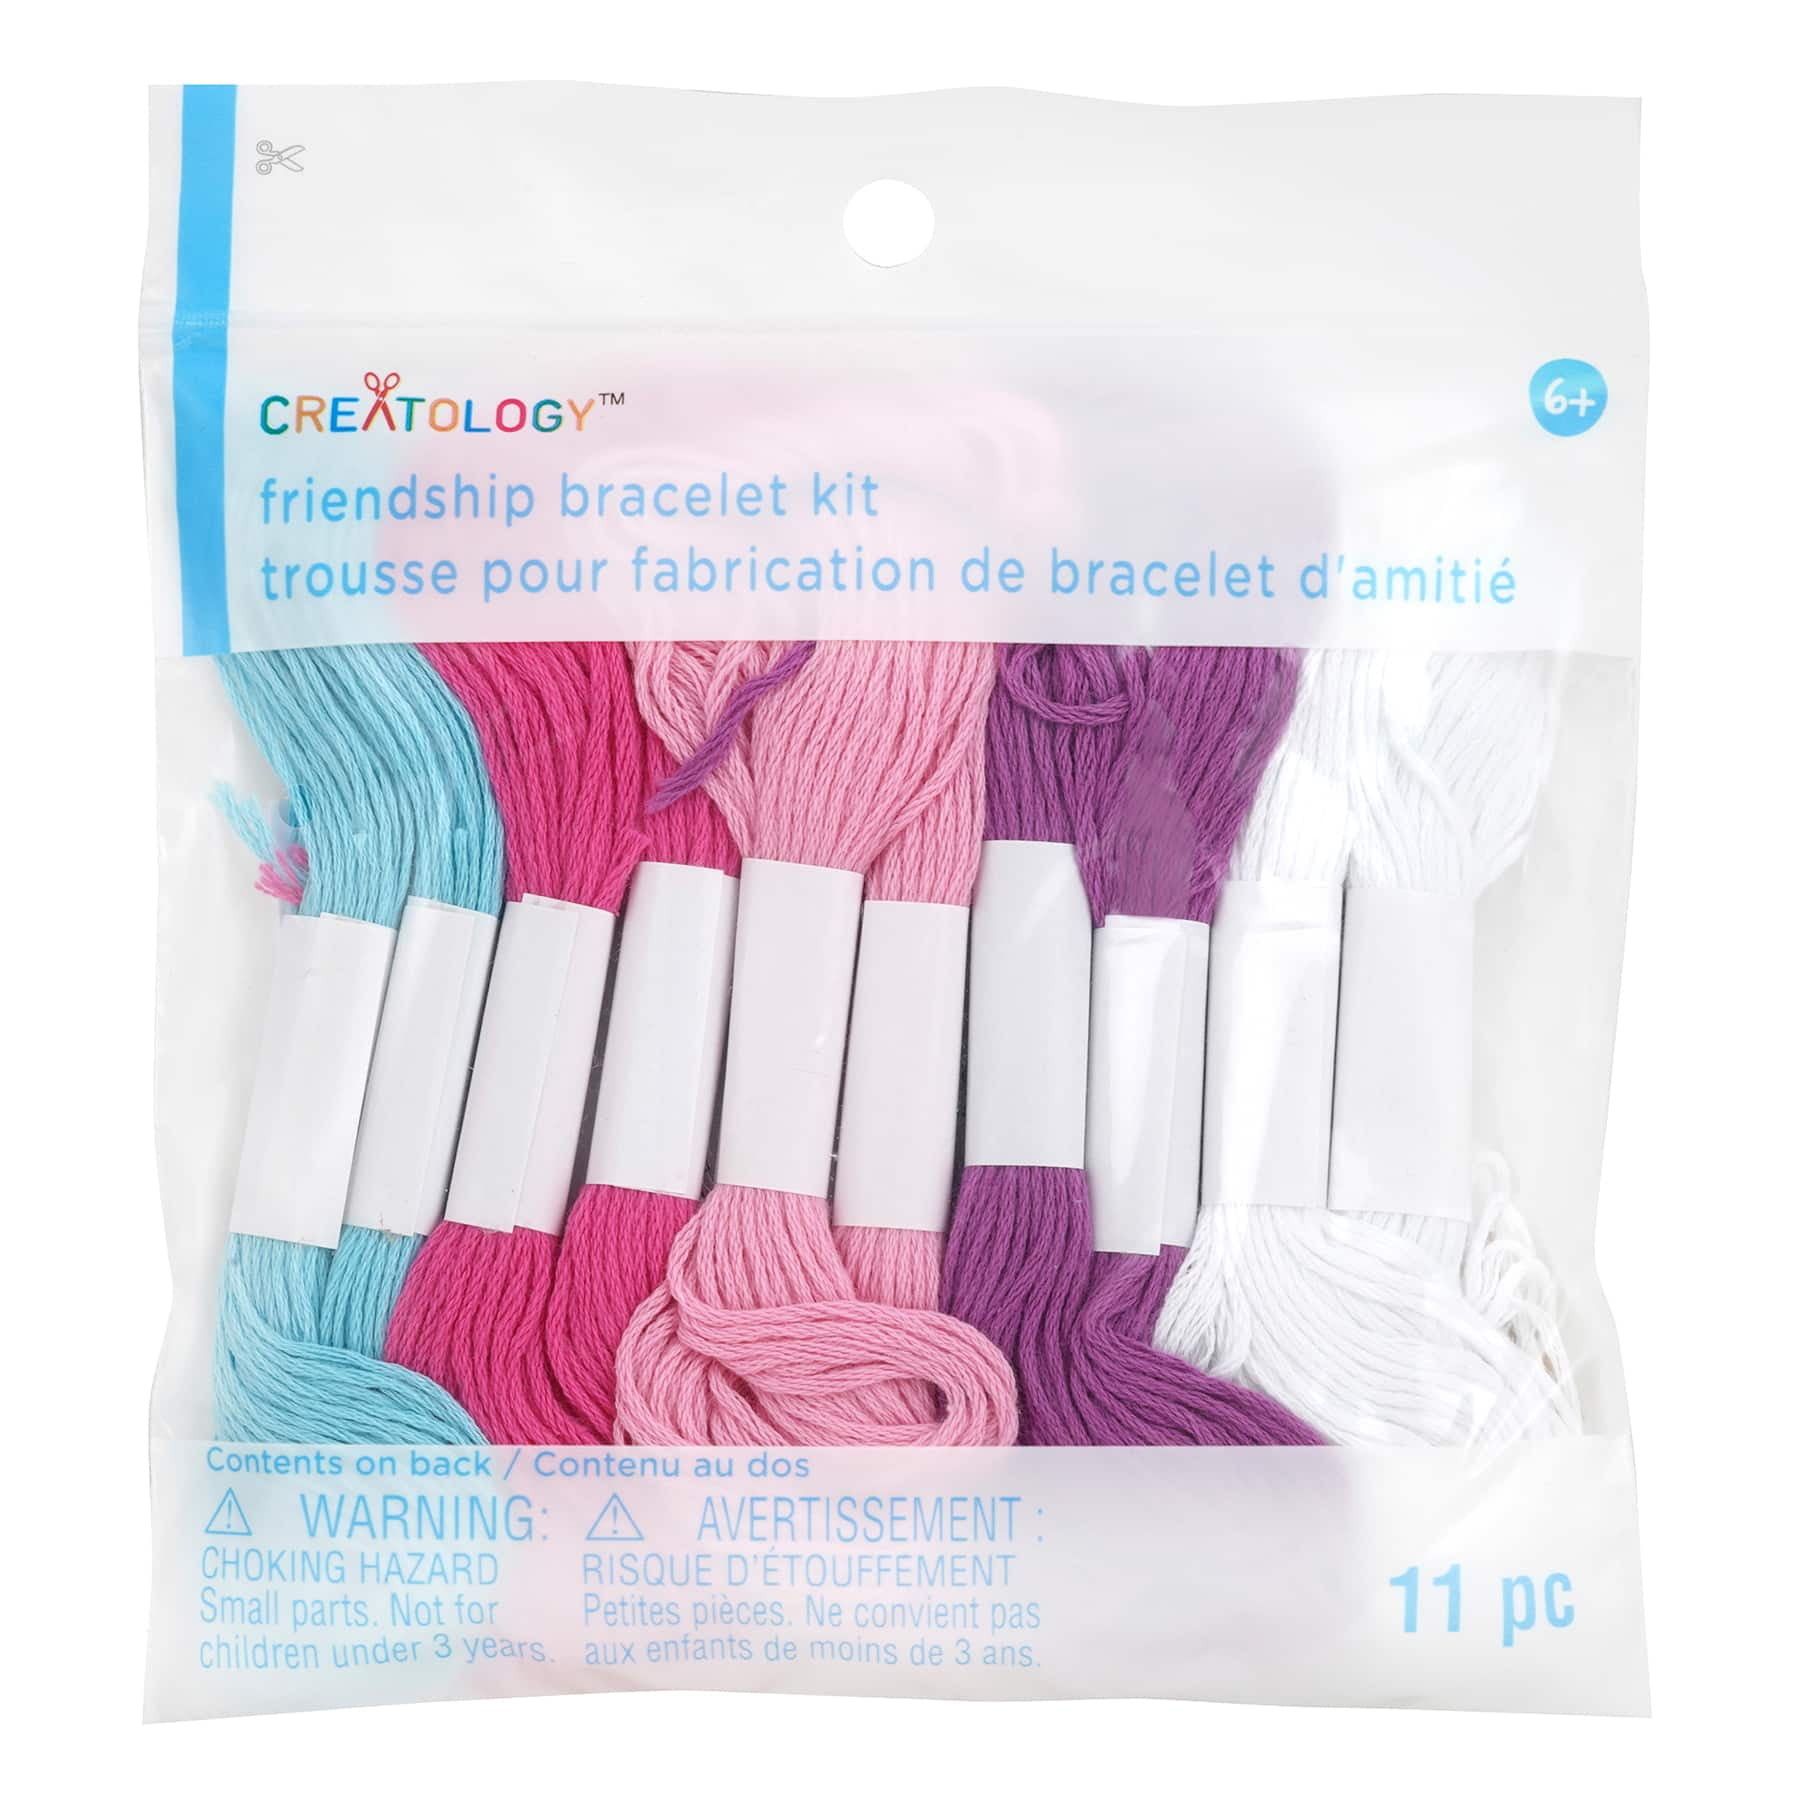 12 Pack: Unicorn Floss Friendship Bracelet Kit by Creatology